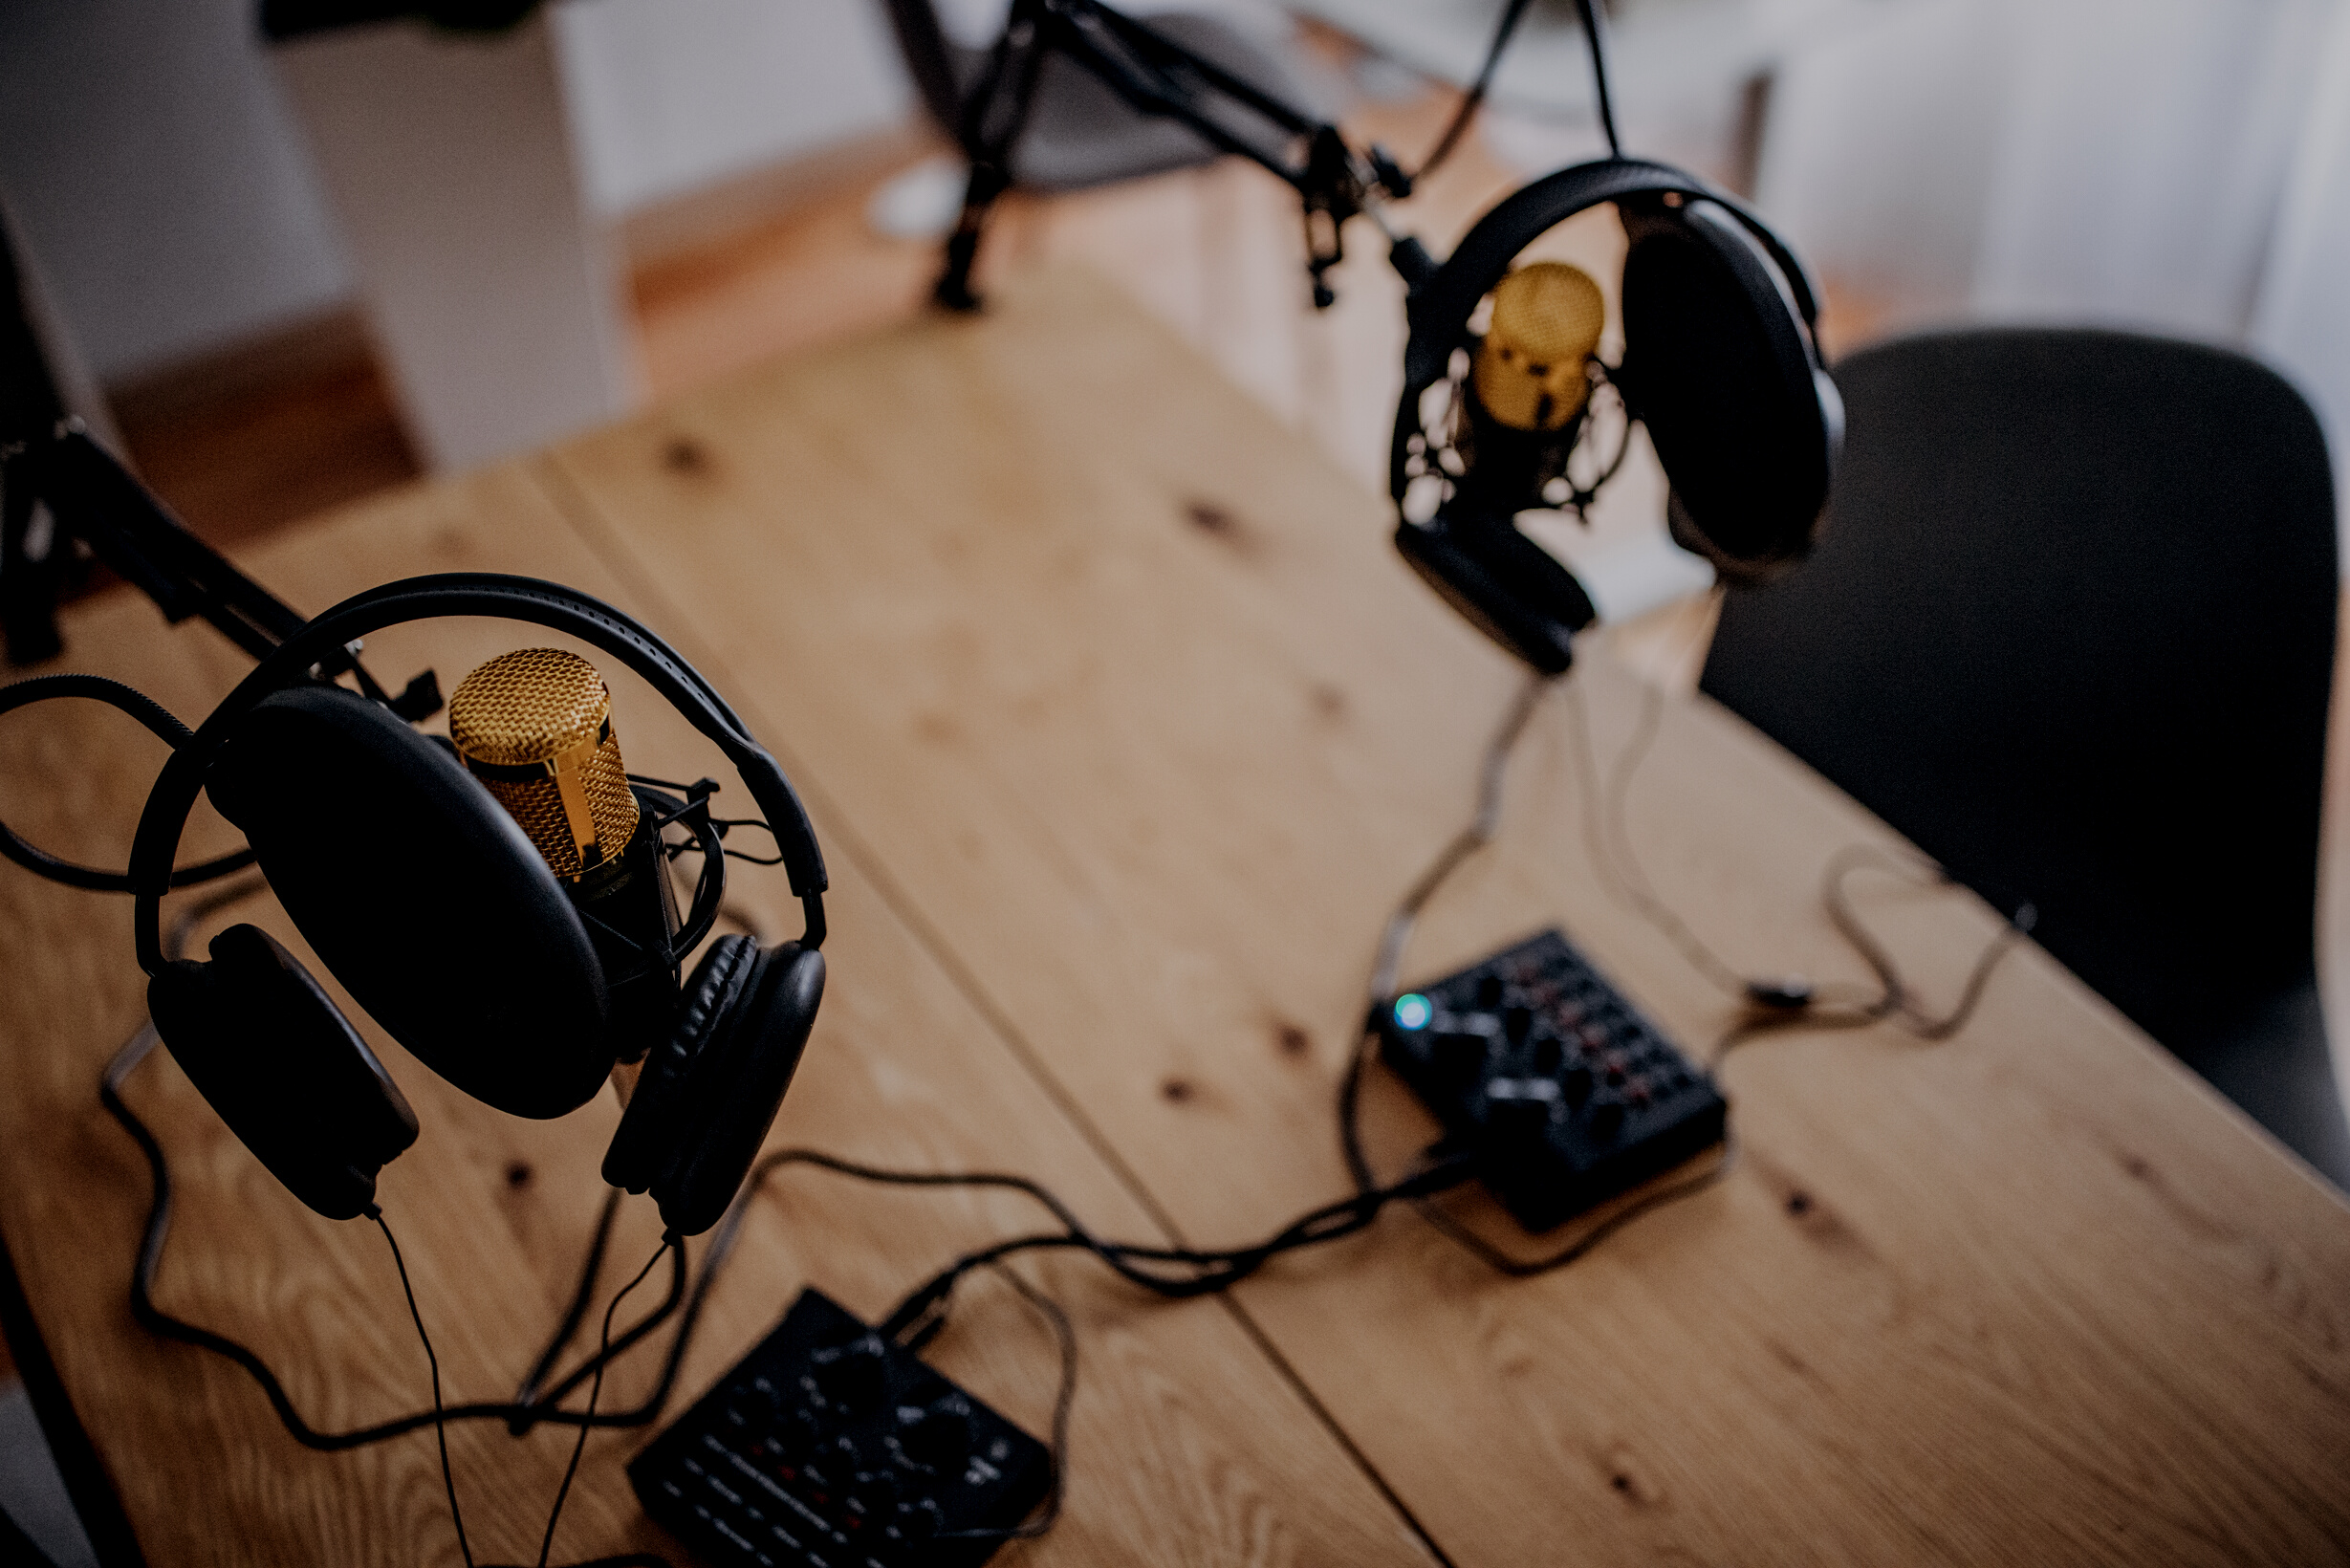 Podcast studio, audio equipment